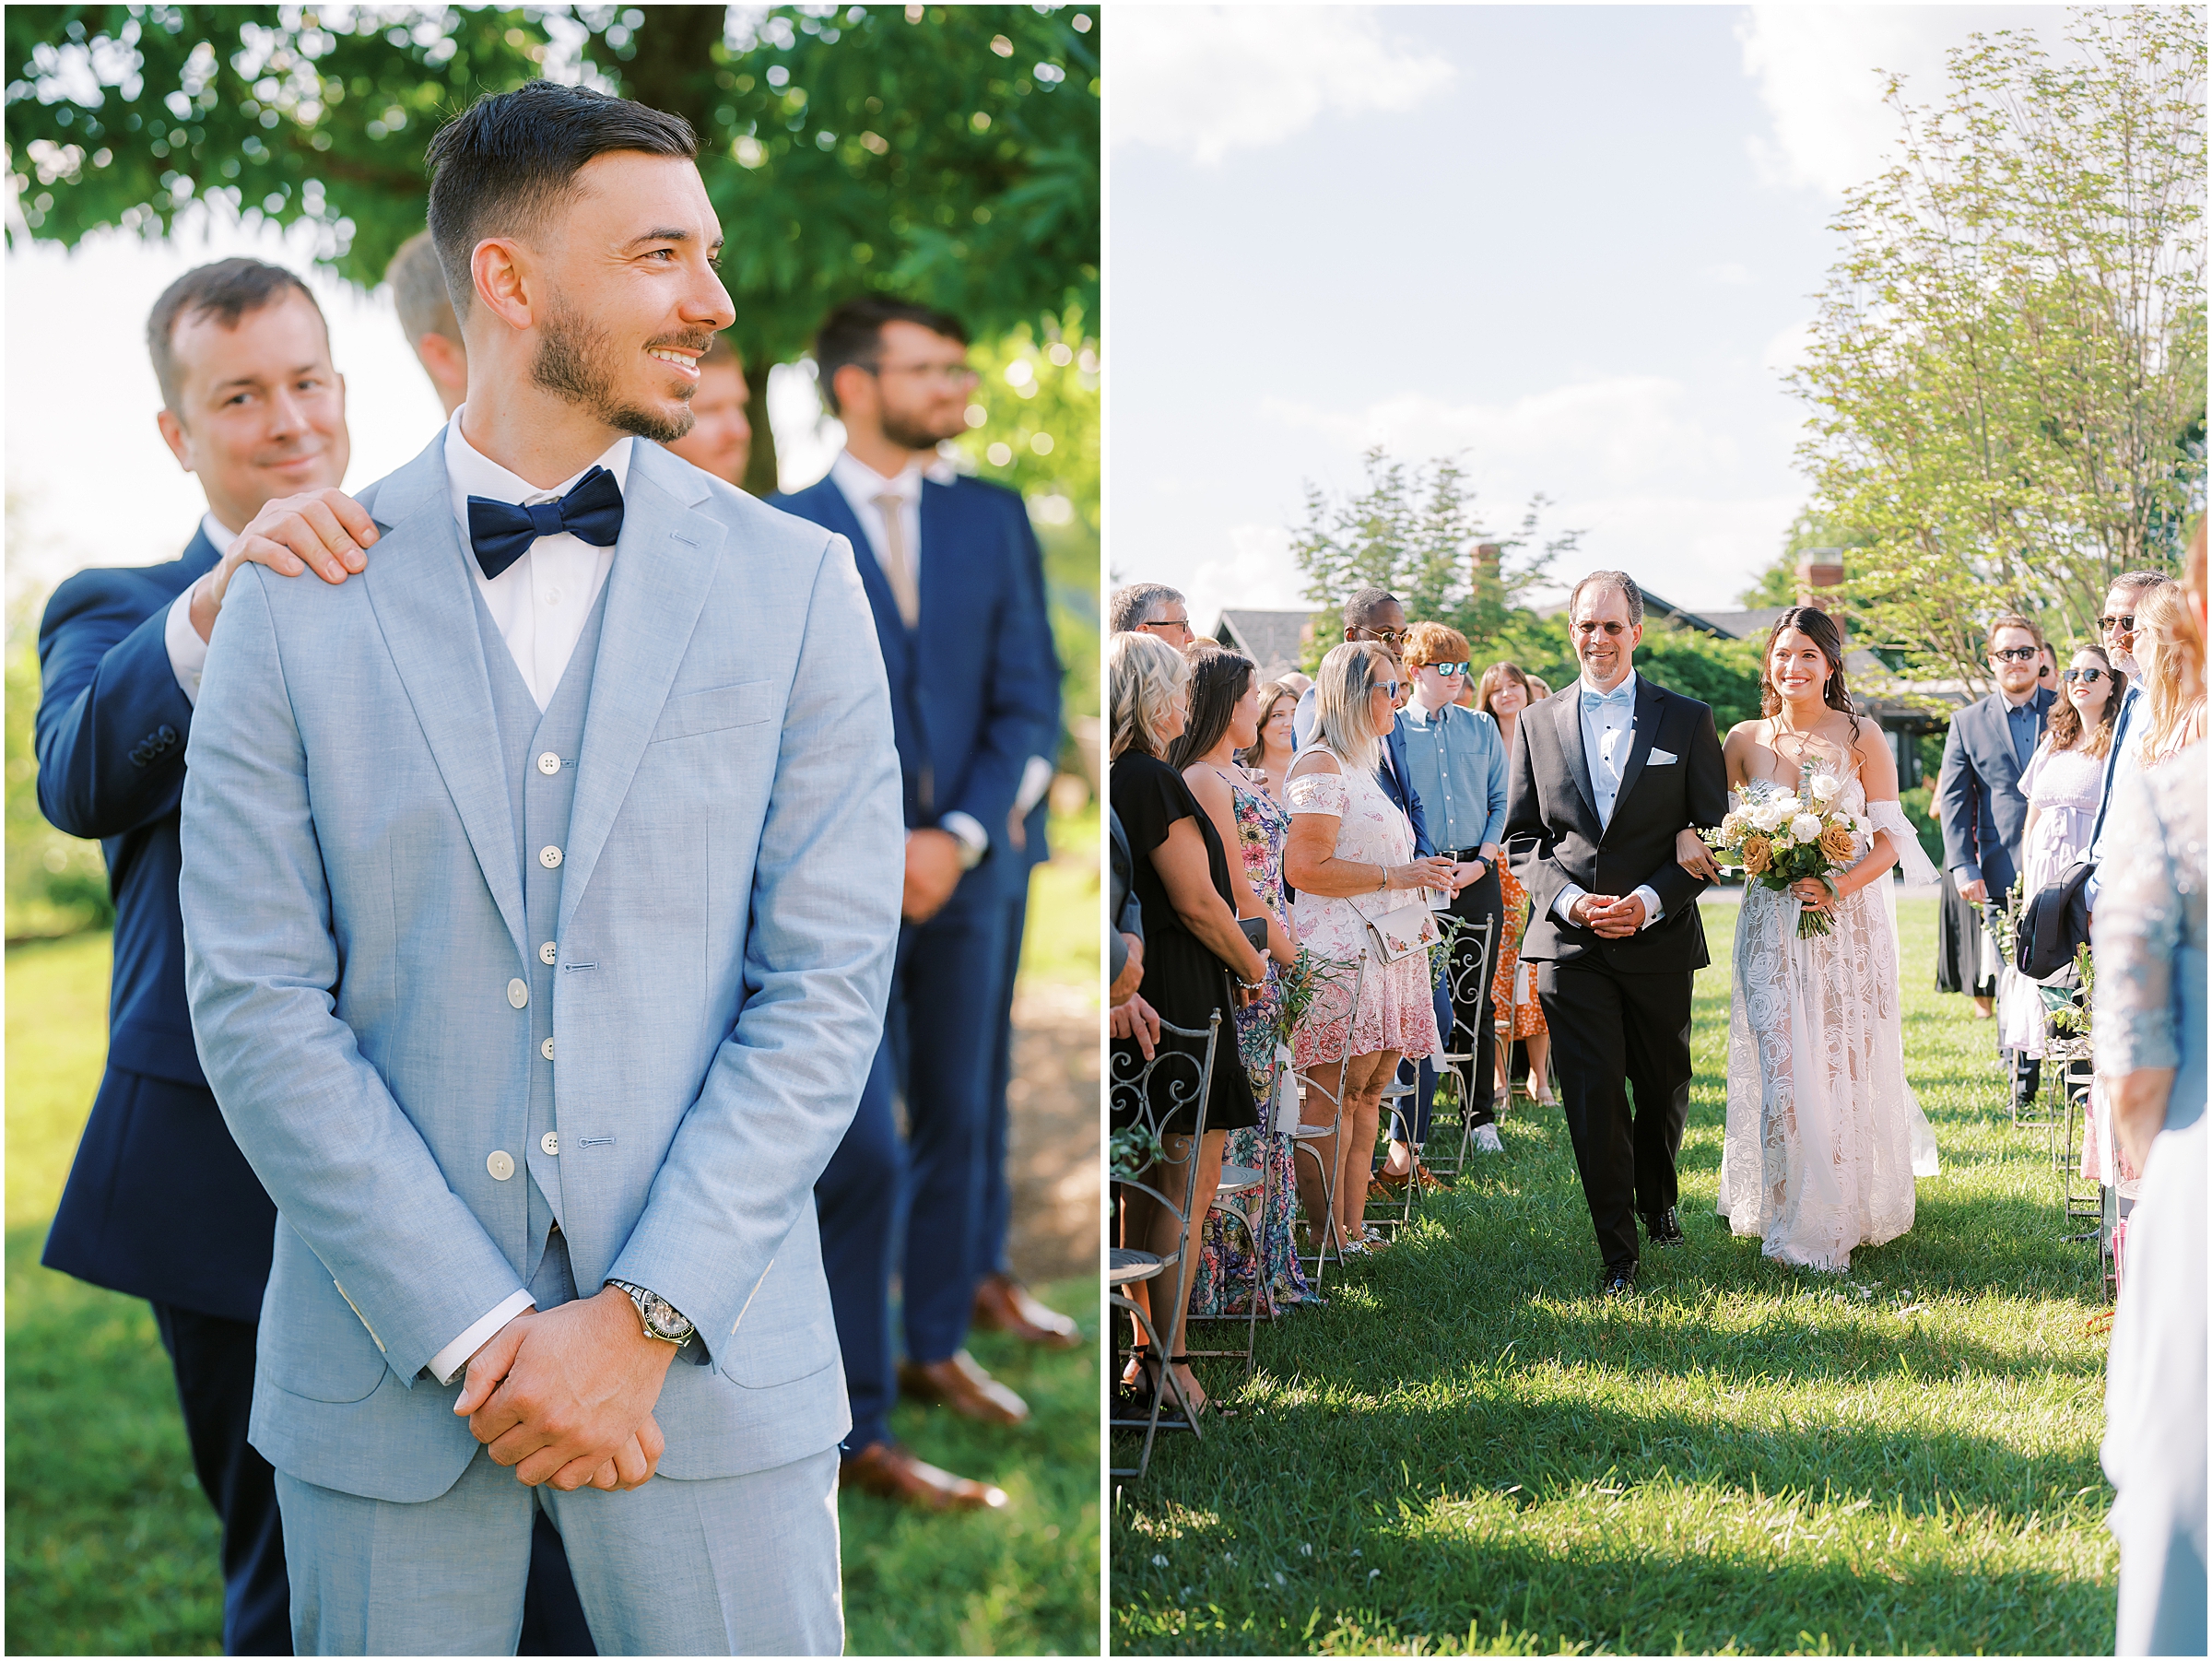 Groom reacting to bride walking down aisle during Romantic, bohemian wedding at the Market at Grelen in Somerset, Virginia